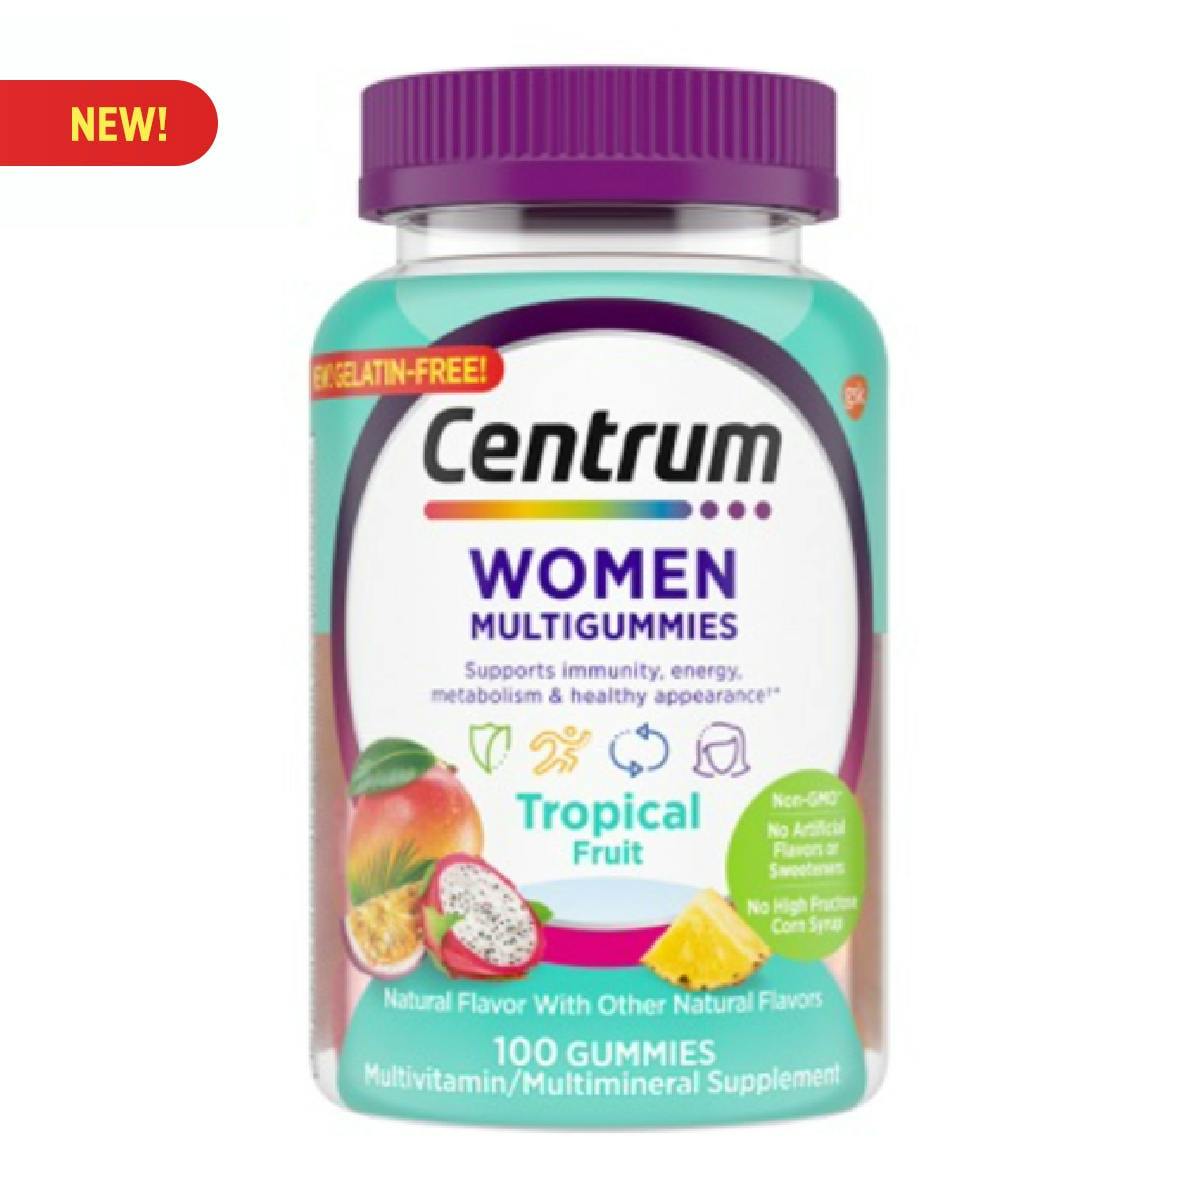 Bottle of Centrum Women MultiGummies in Tropical Fruit Flavors